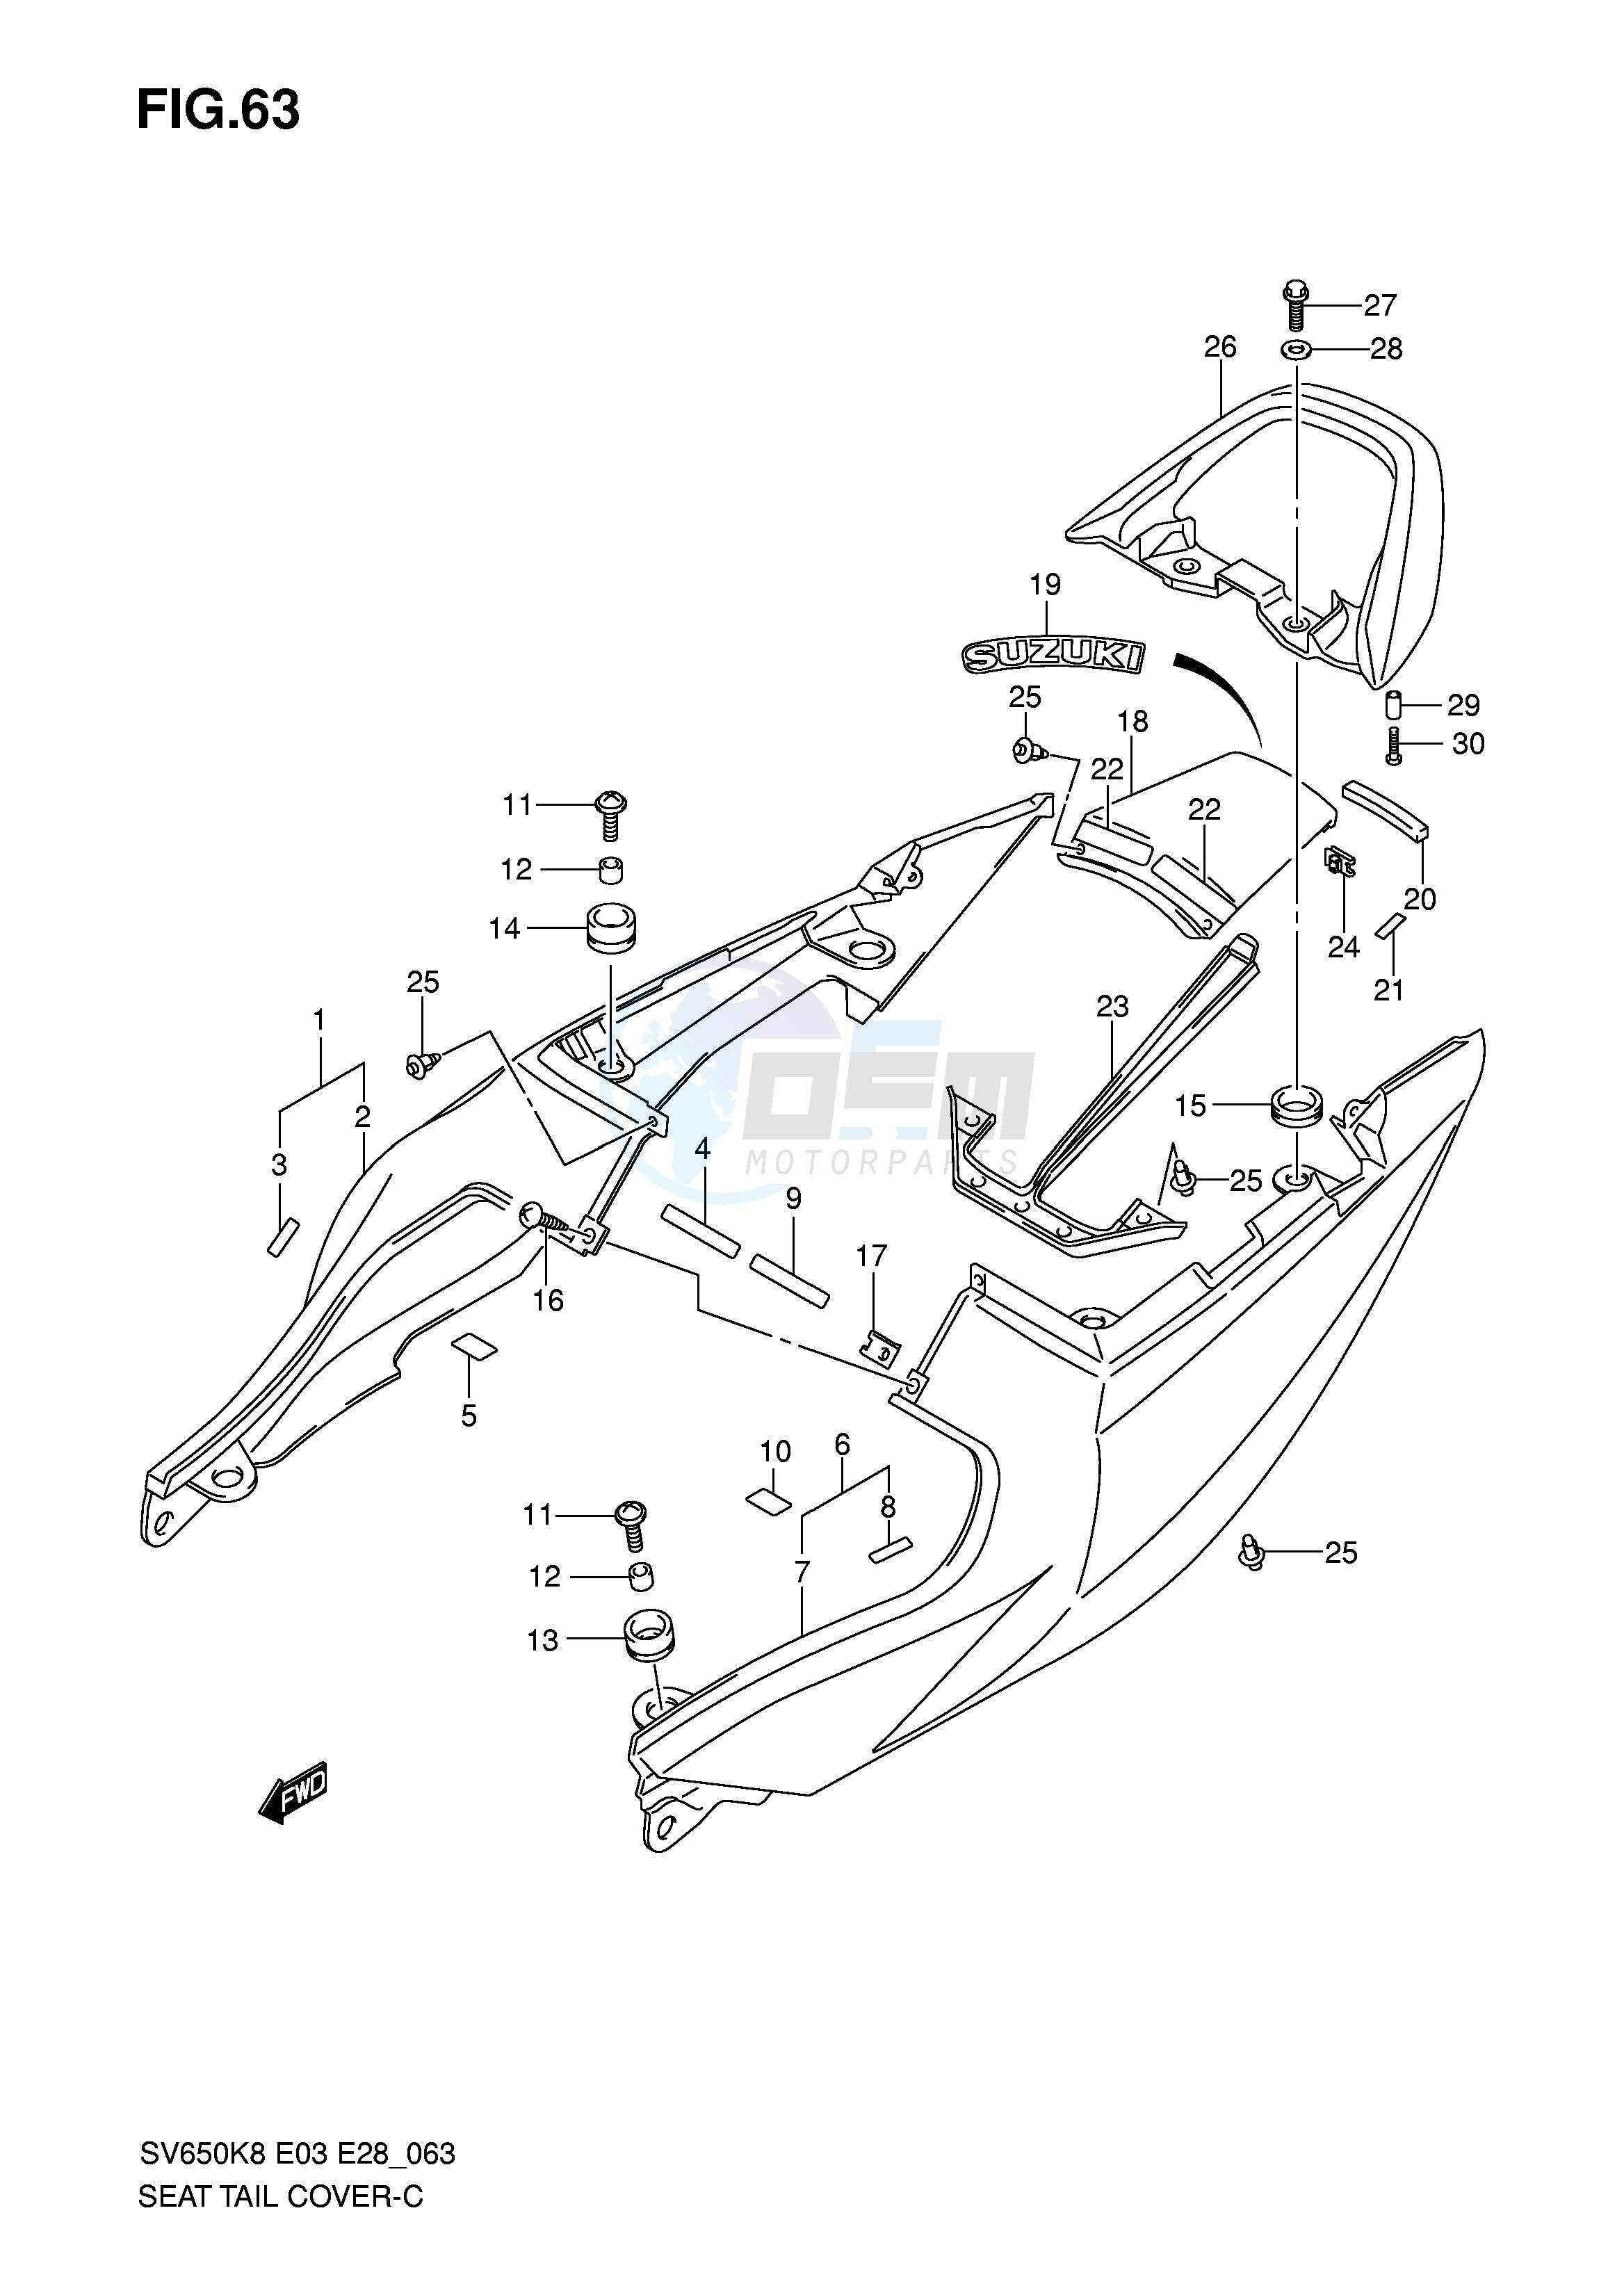 SEAT TAIL COVER (SV650SK8 SAK8) blueprint